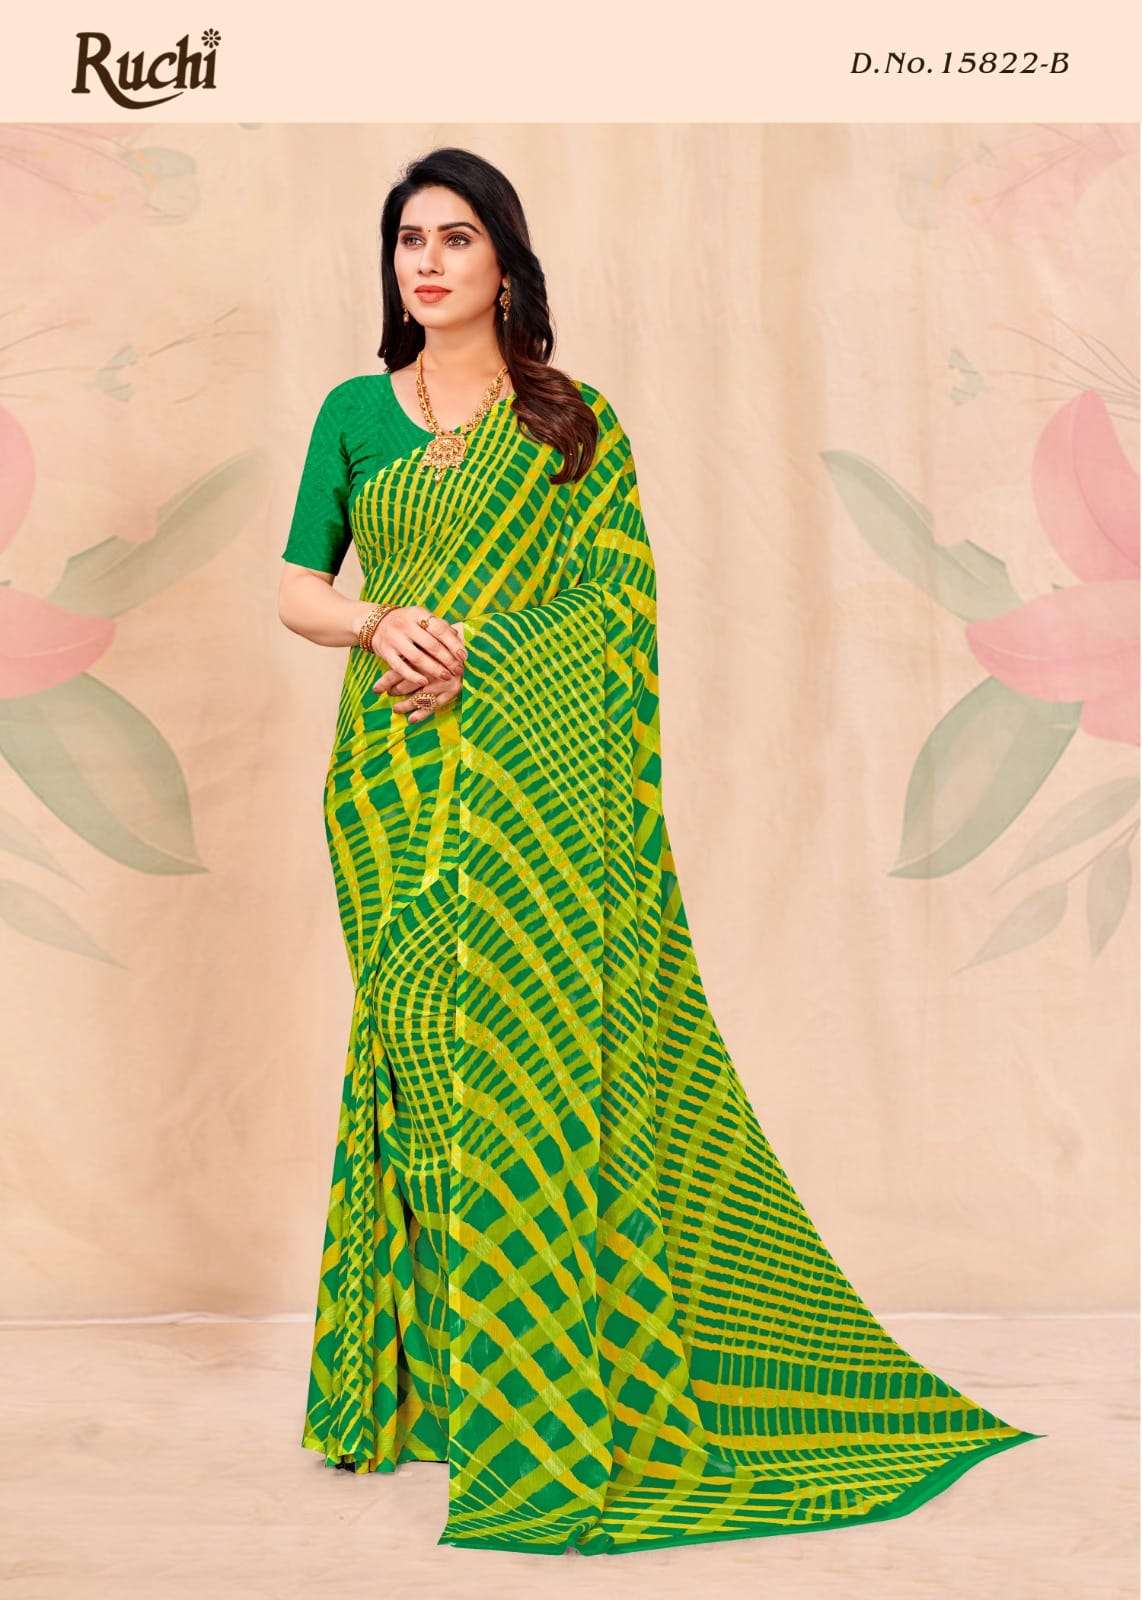 ruchi star chiffon 15822 adorable casual wear sarees supplier 